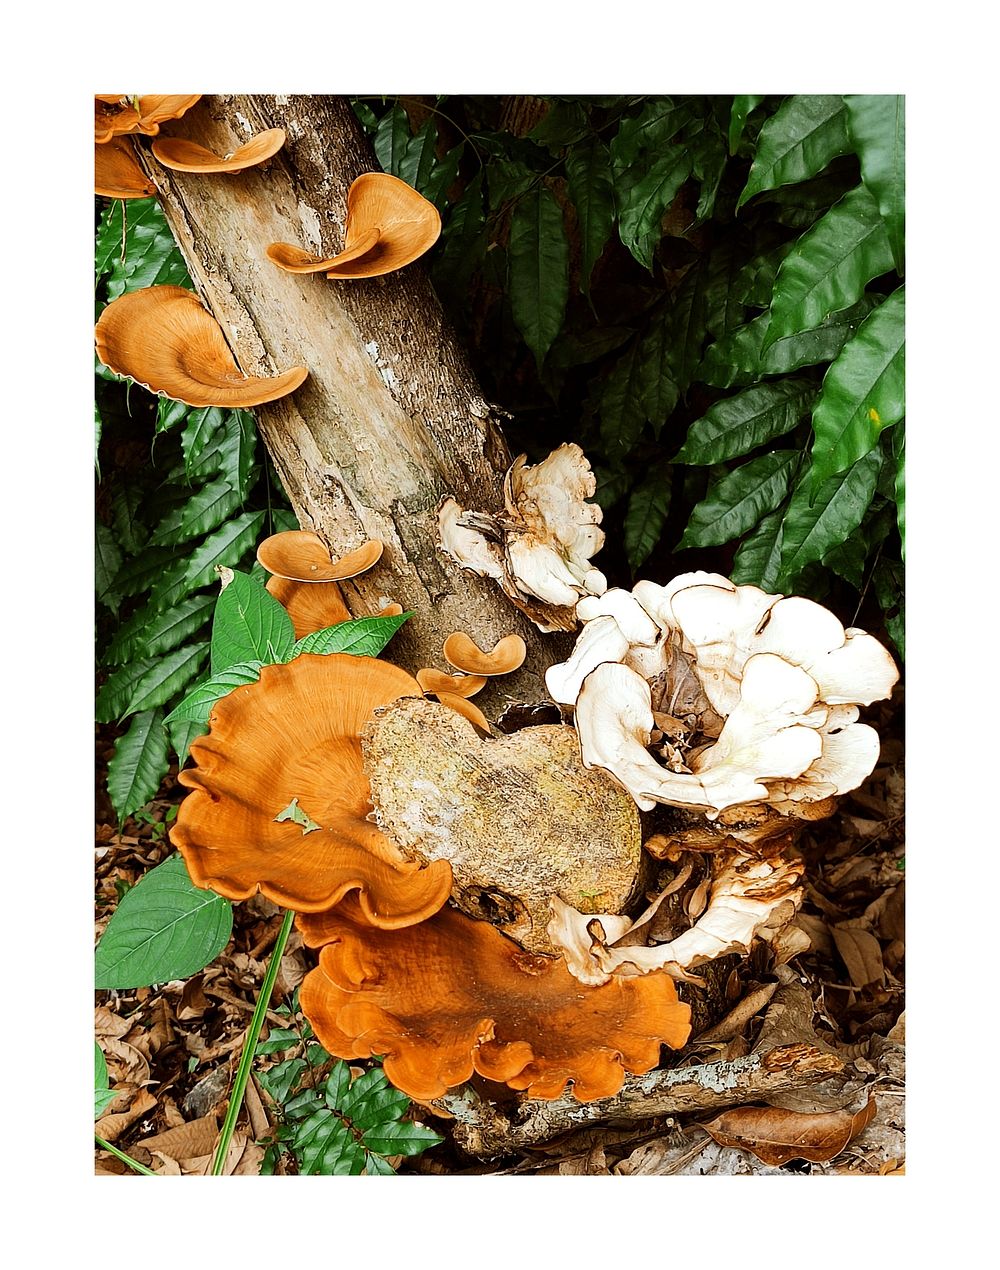 Fungi bark mushroom, rainforest ecology.